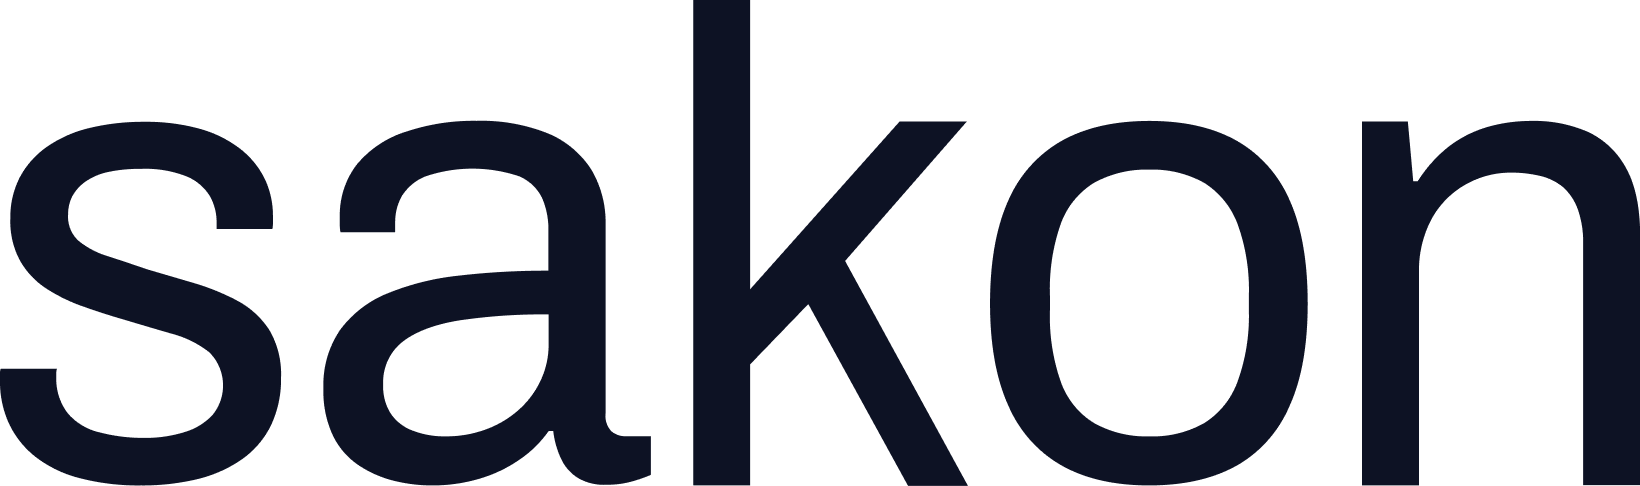 GSG Rebrands as Sako